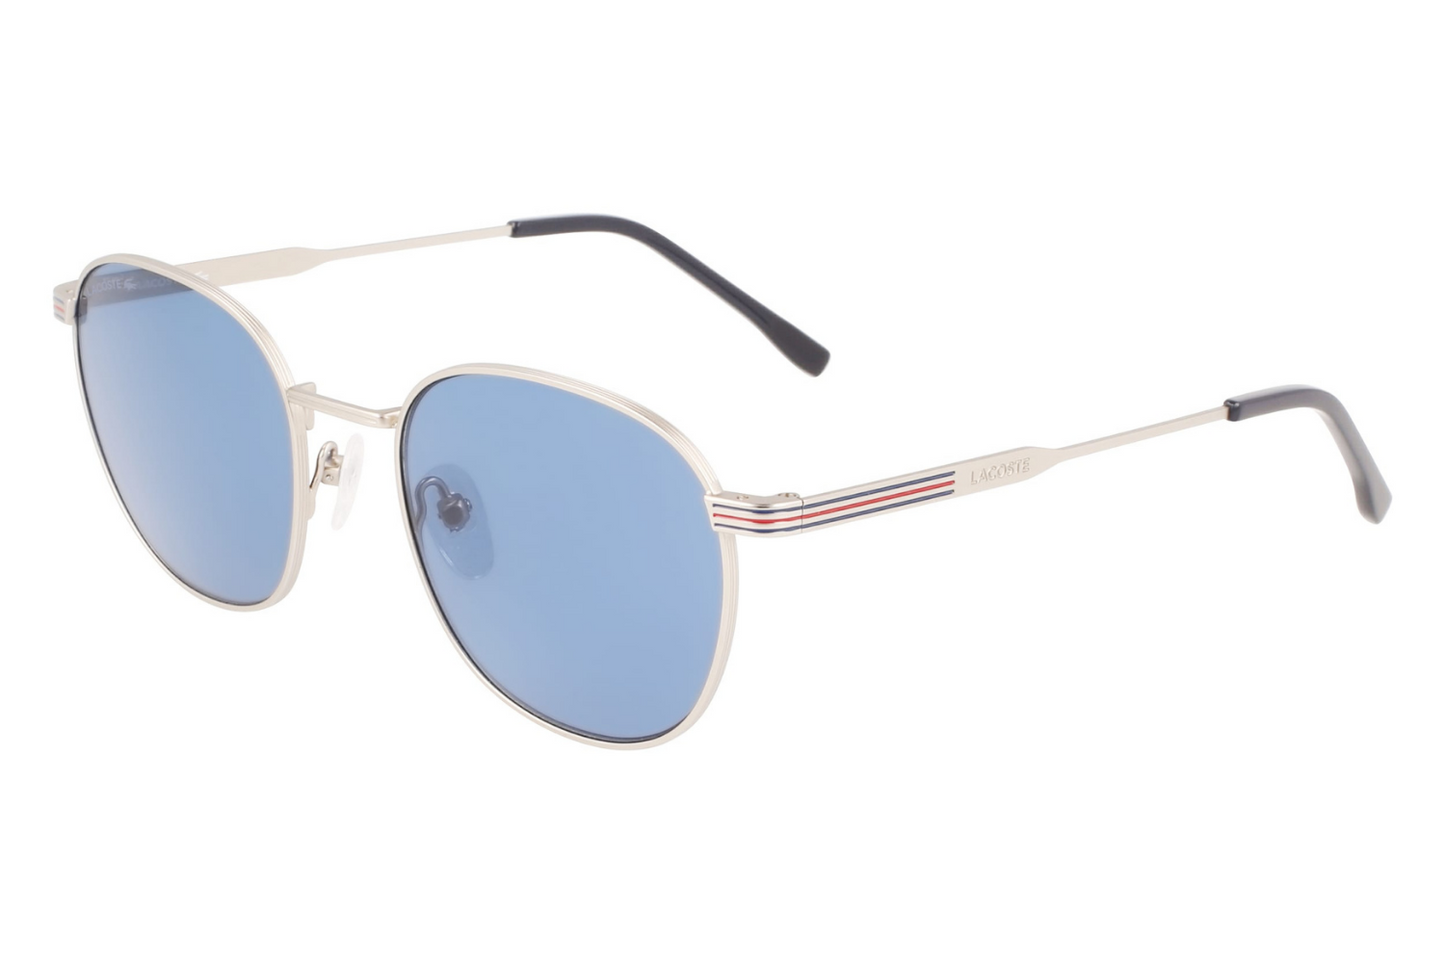 Buy Lacoste Men's L186s Aviator Sunglasses, Blue Matte, 57 mm at Amazon.in